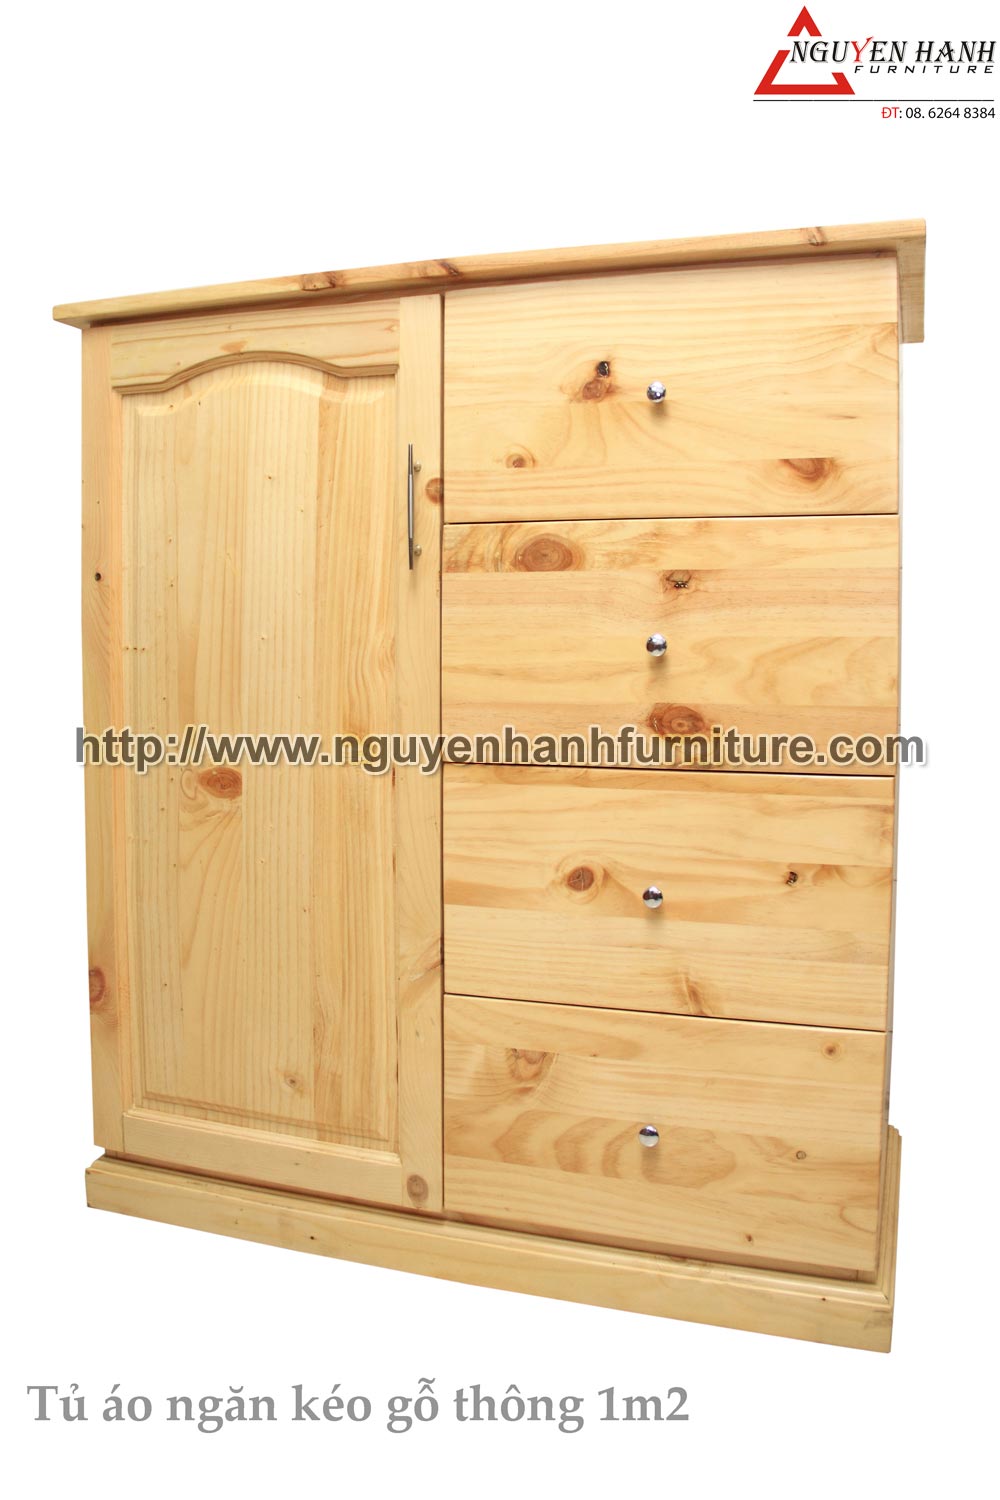 Name product: 1m2 Drawers Wardrobe of Pine wood